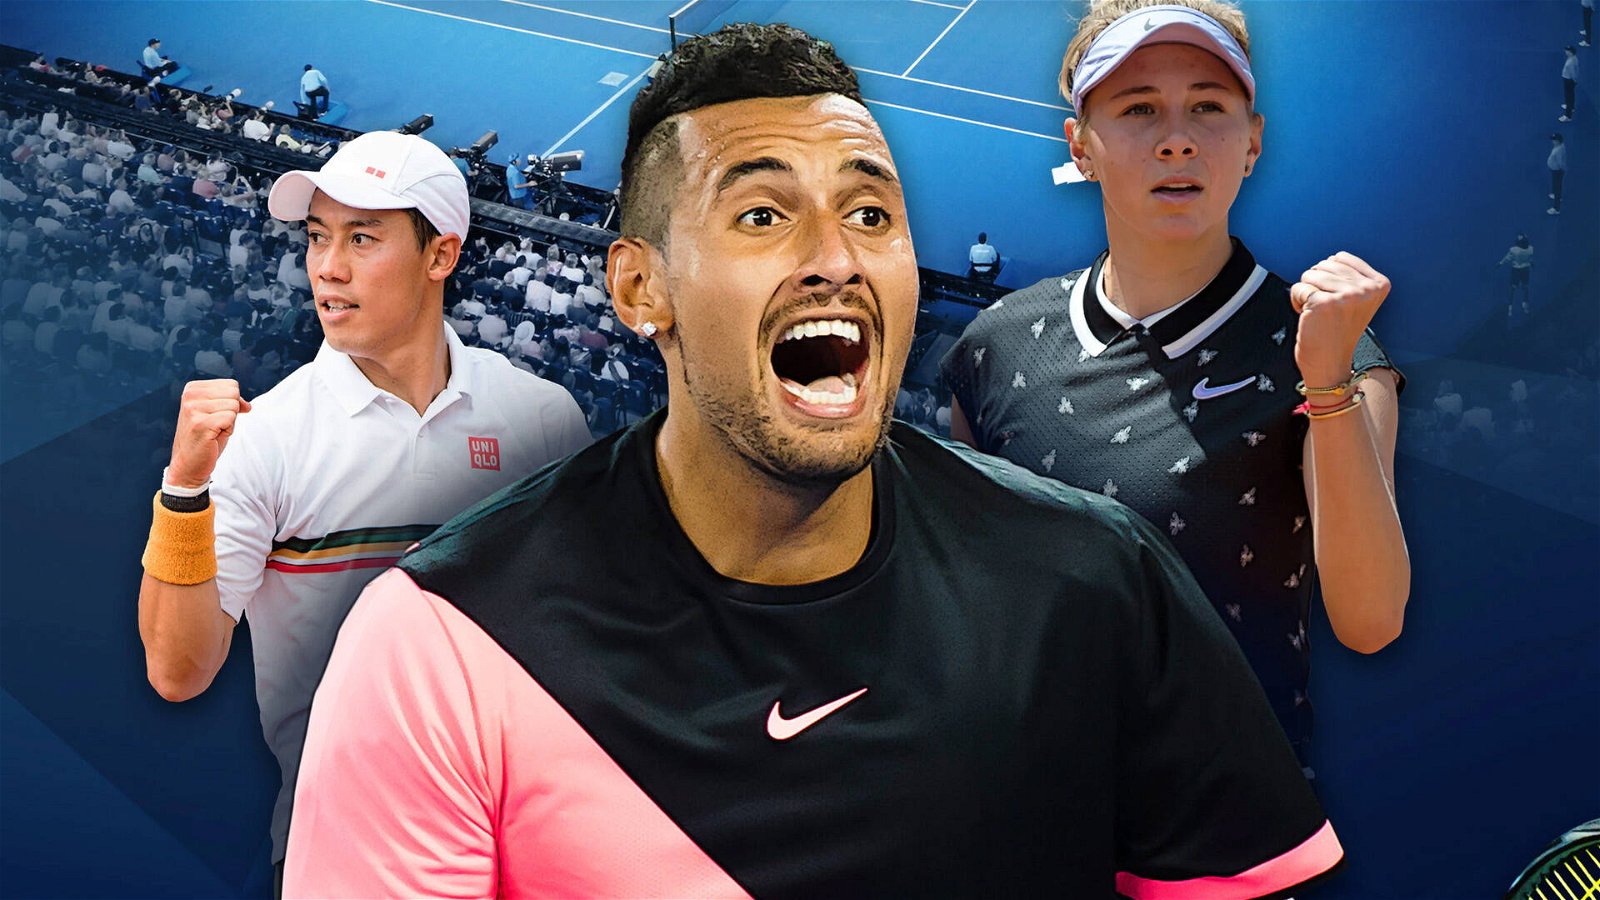 Matchpoint: Tennis Championships | Provato - Torna il grande tennis?